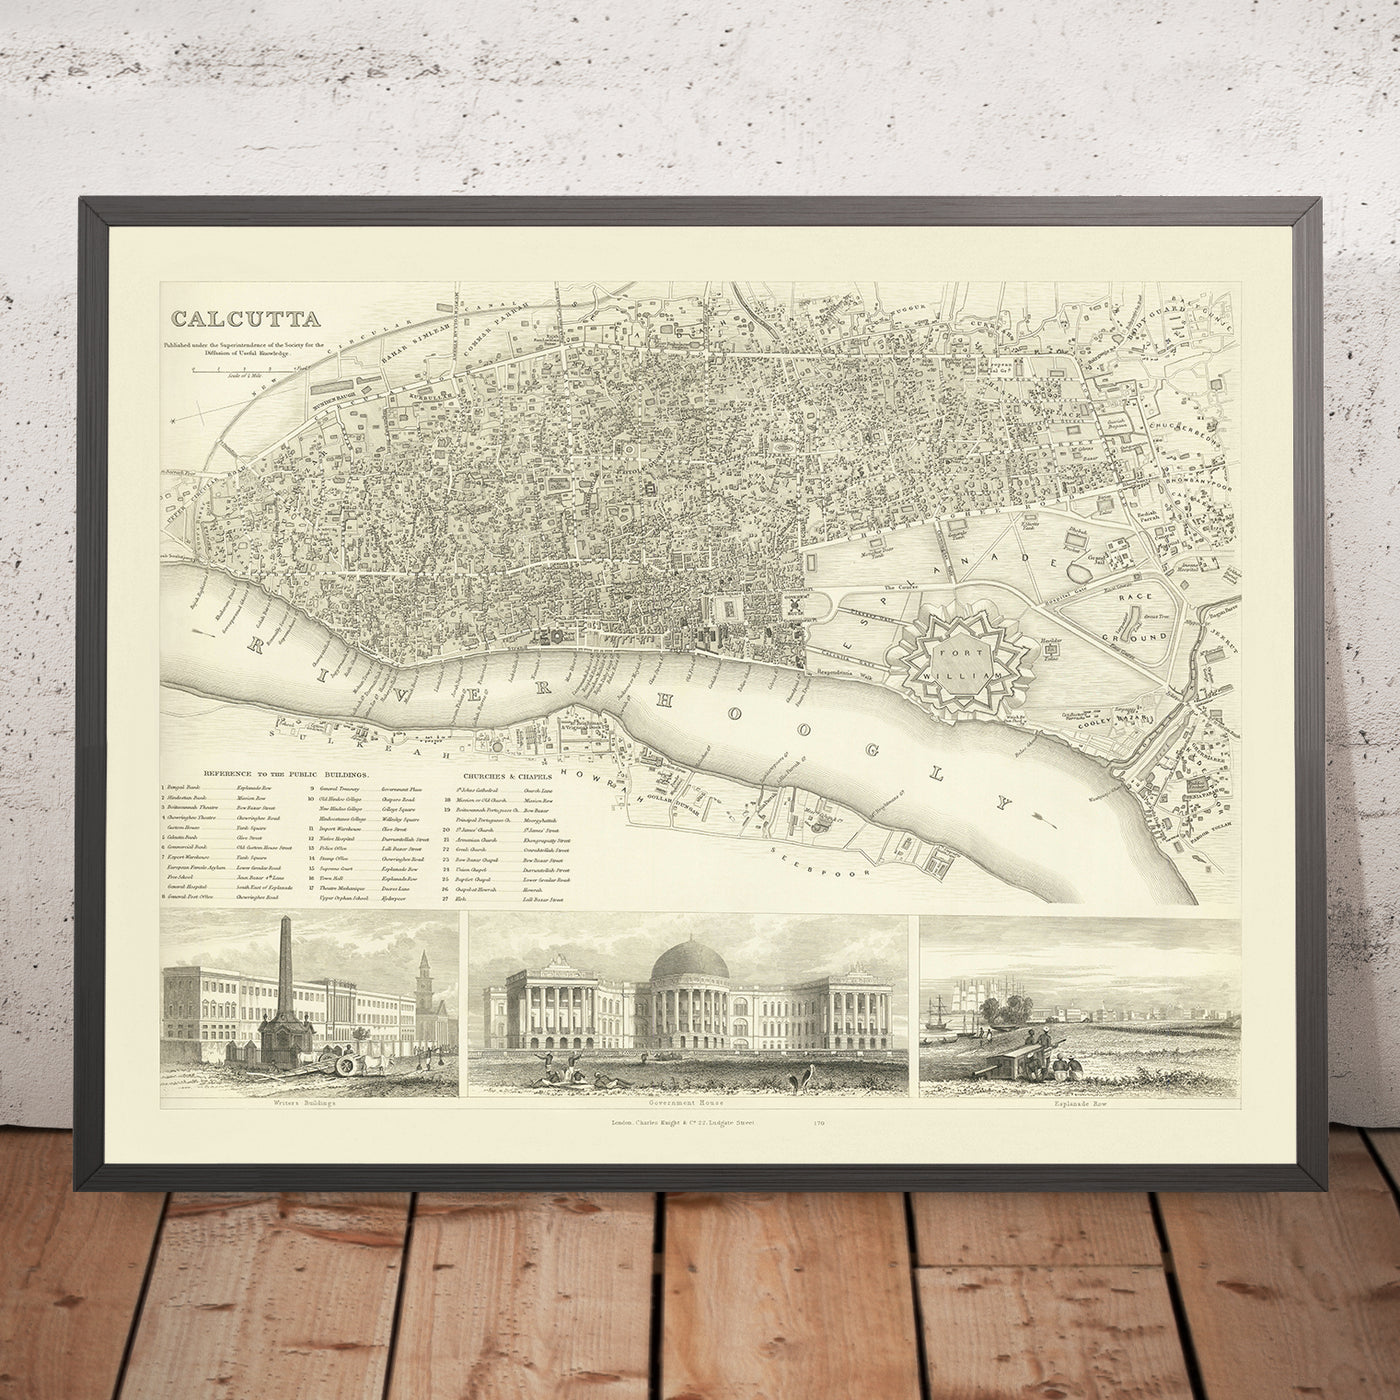 Old Map of Calcutta (Kolkata), 1840: Fort William, Government House, Esplanade Row, Maidan, Howrah Bridge